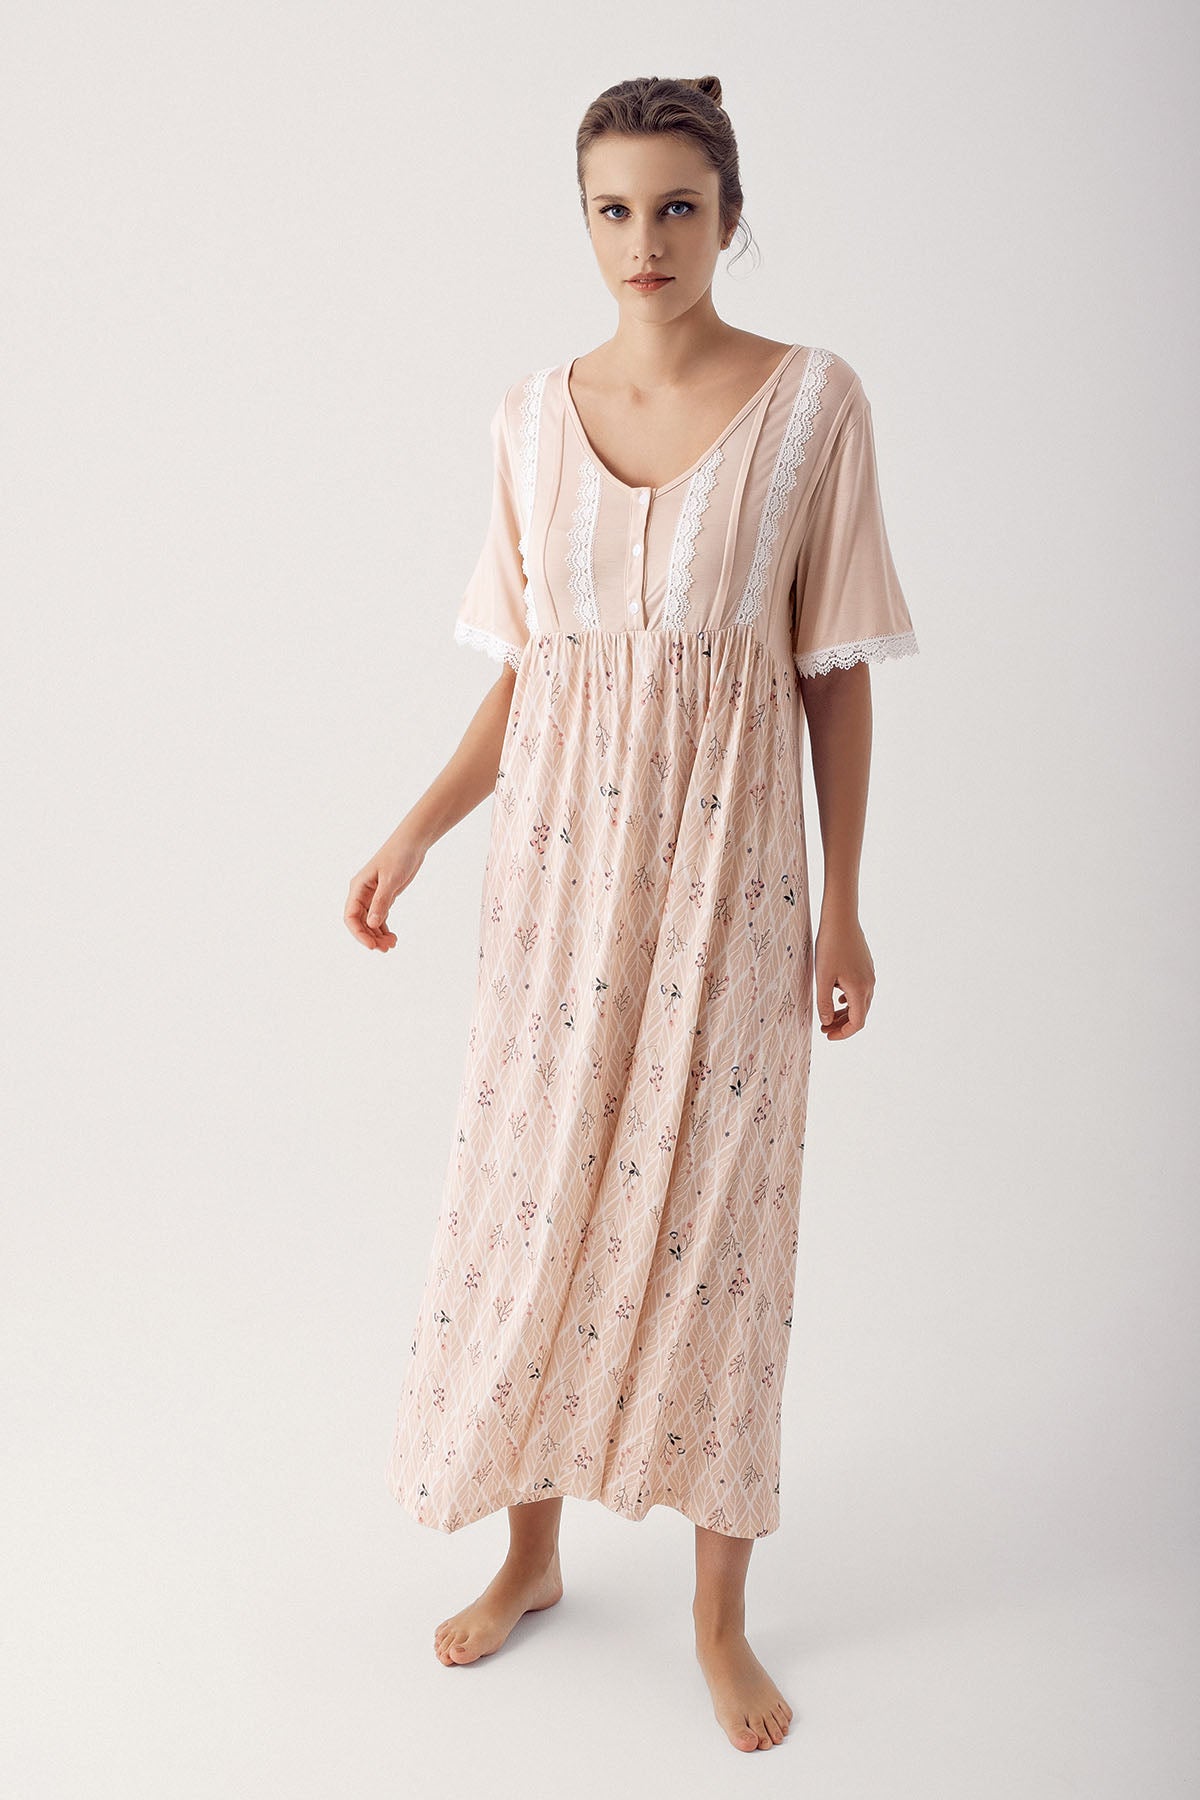 Shopymommy 14126 Lace Collar Flower Pattern Plus Size Maternity & Nursing Nightgown Beige